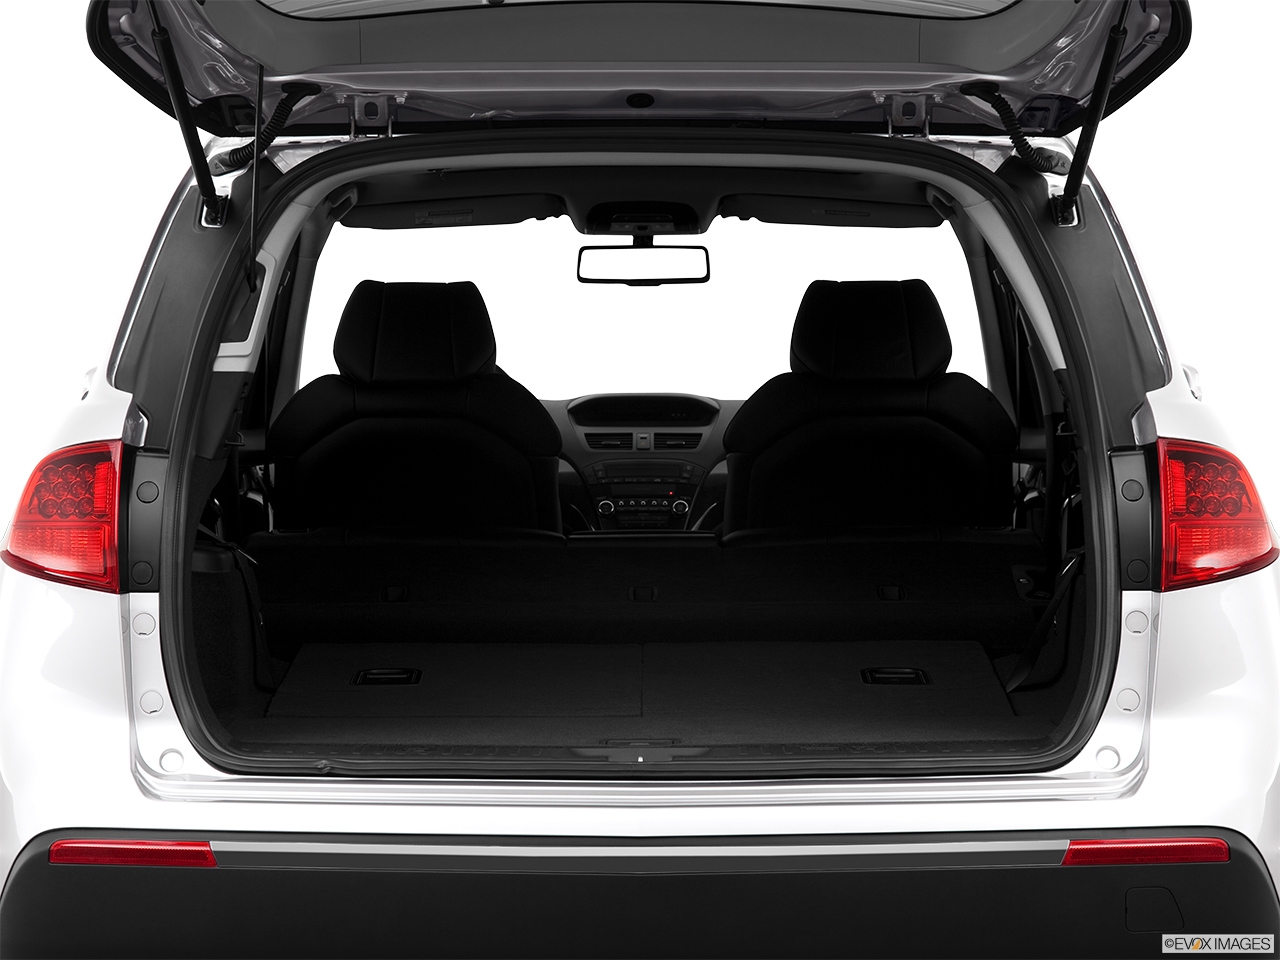 2013 Acura MDX Base Hatchback & SUV rear angle. 